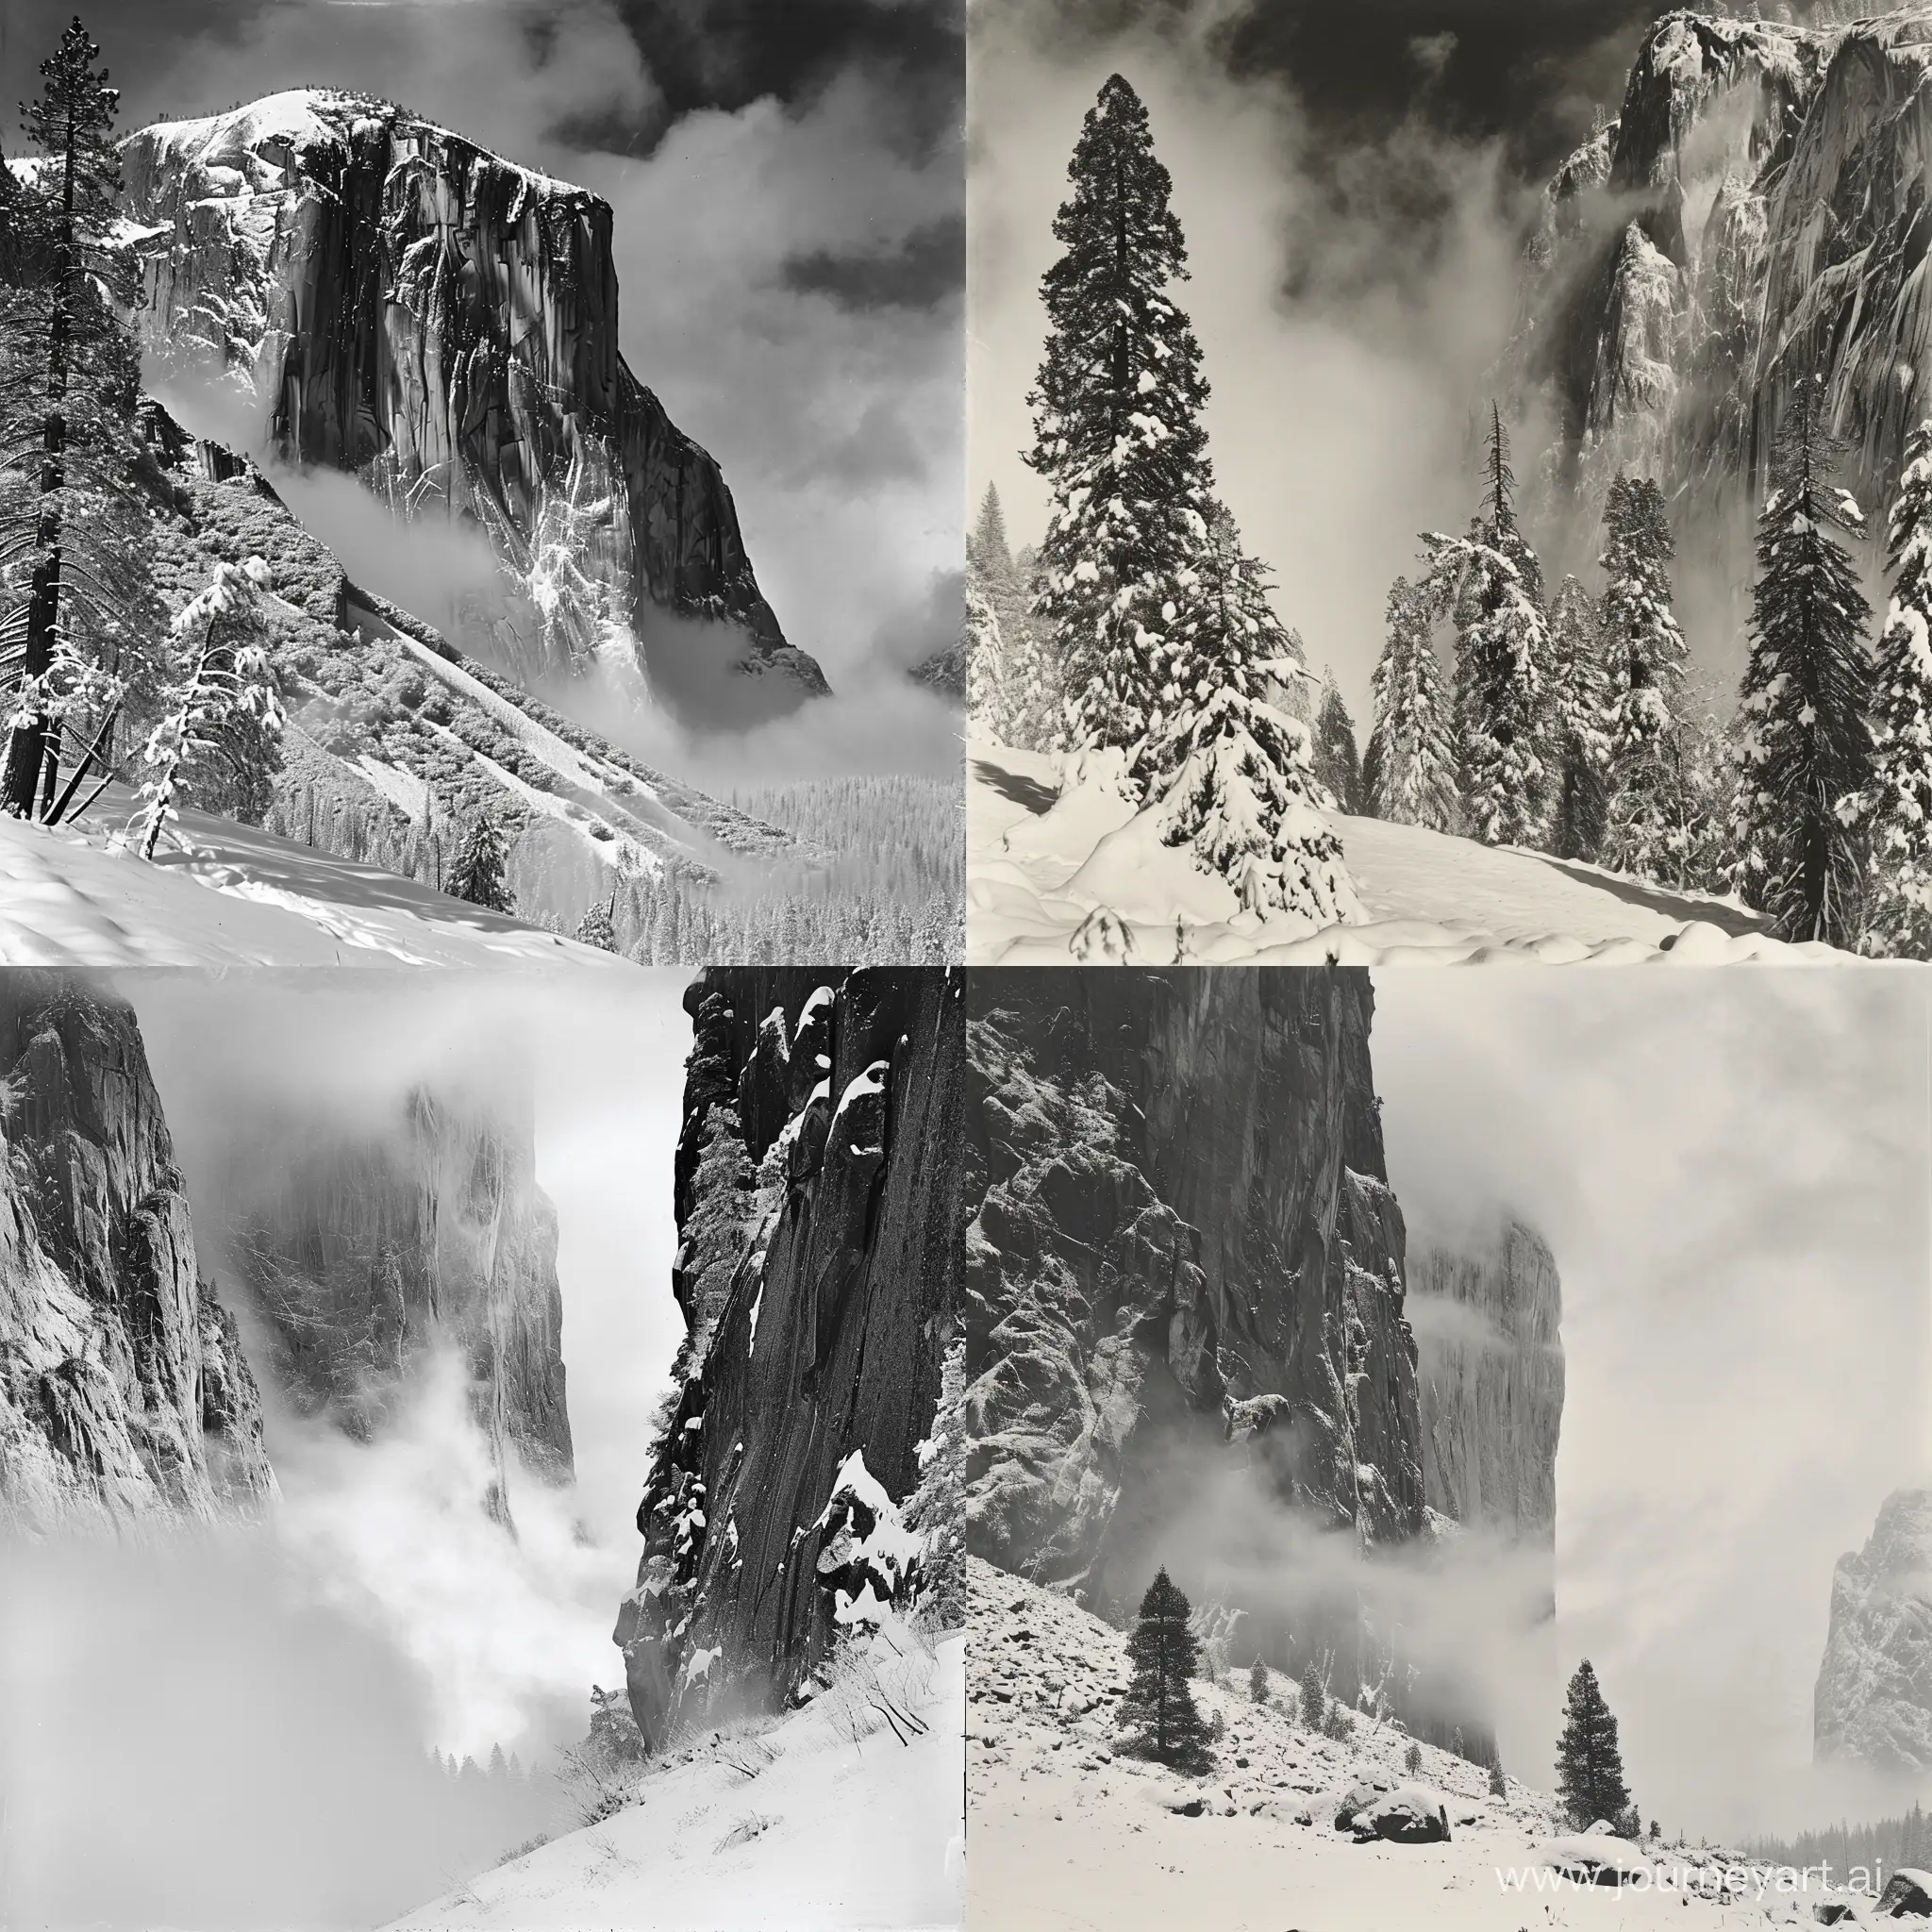 Clearing Winter Storm, Ansel Adams, Yosemite National Park, c 1937